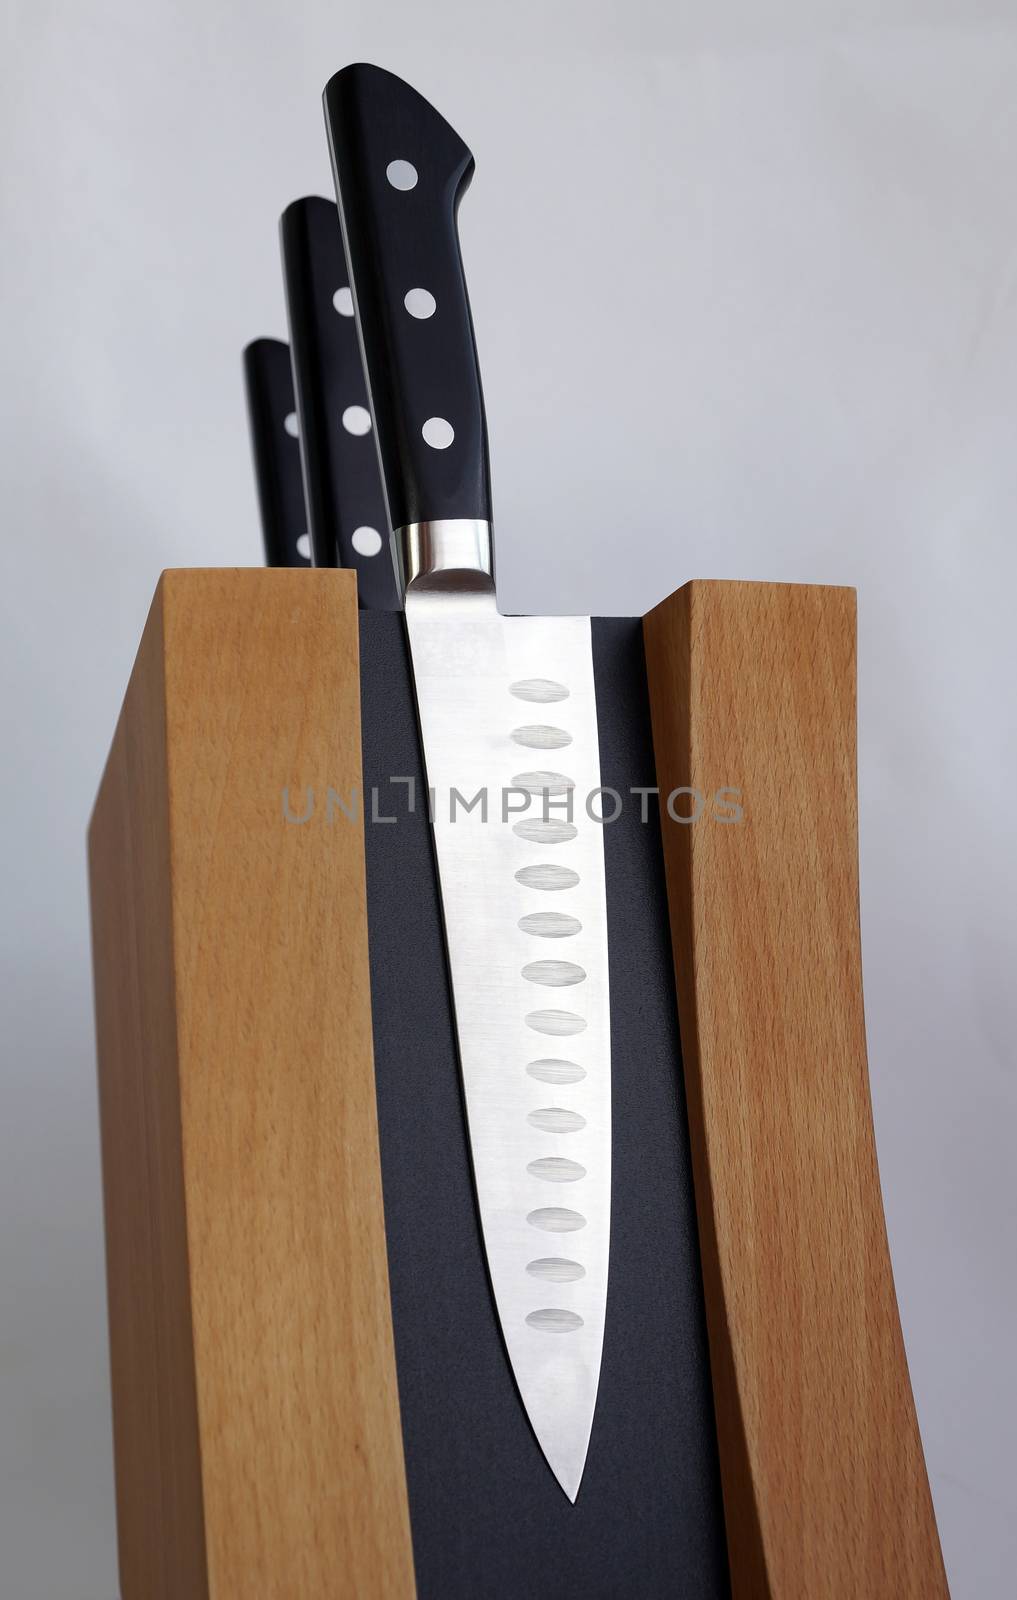 Set of knives for kitchen by Vadimdem